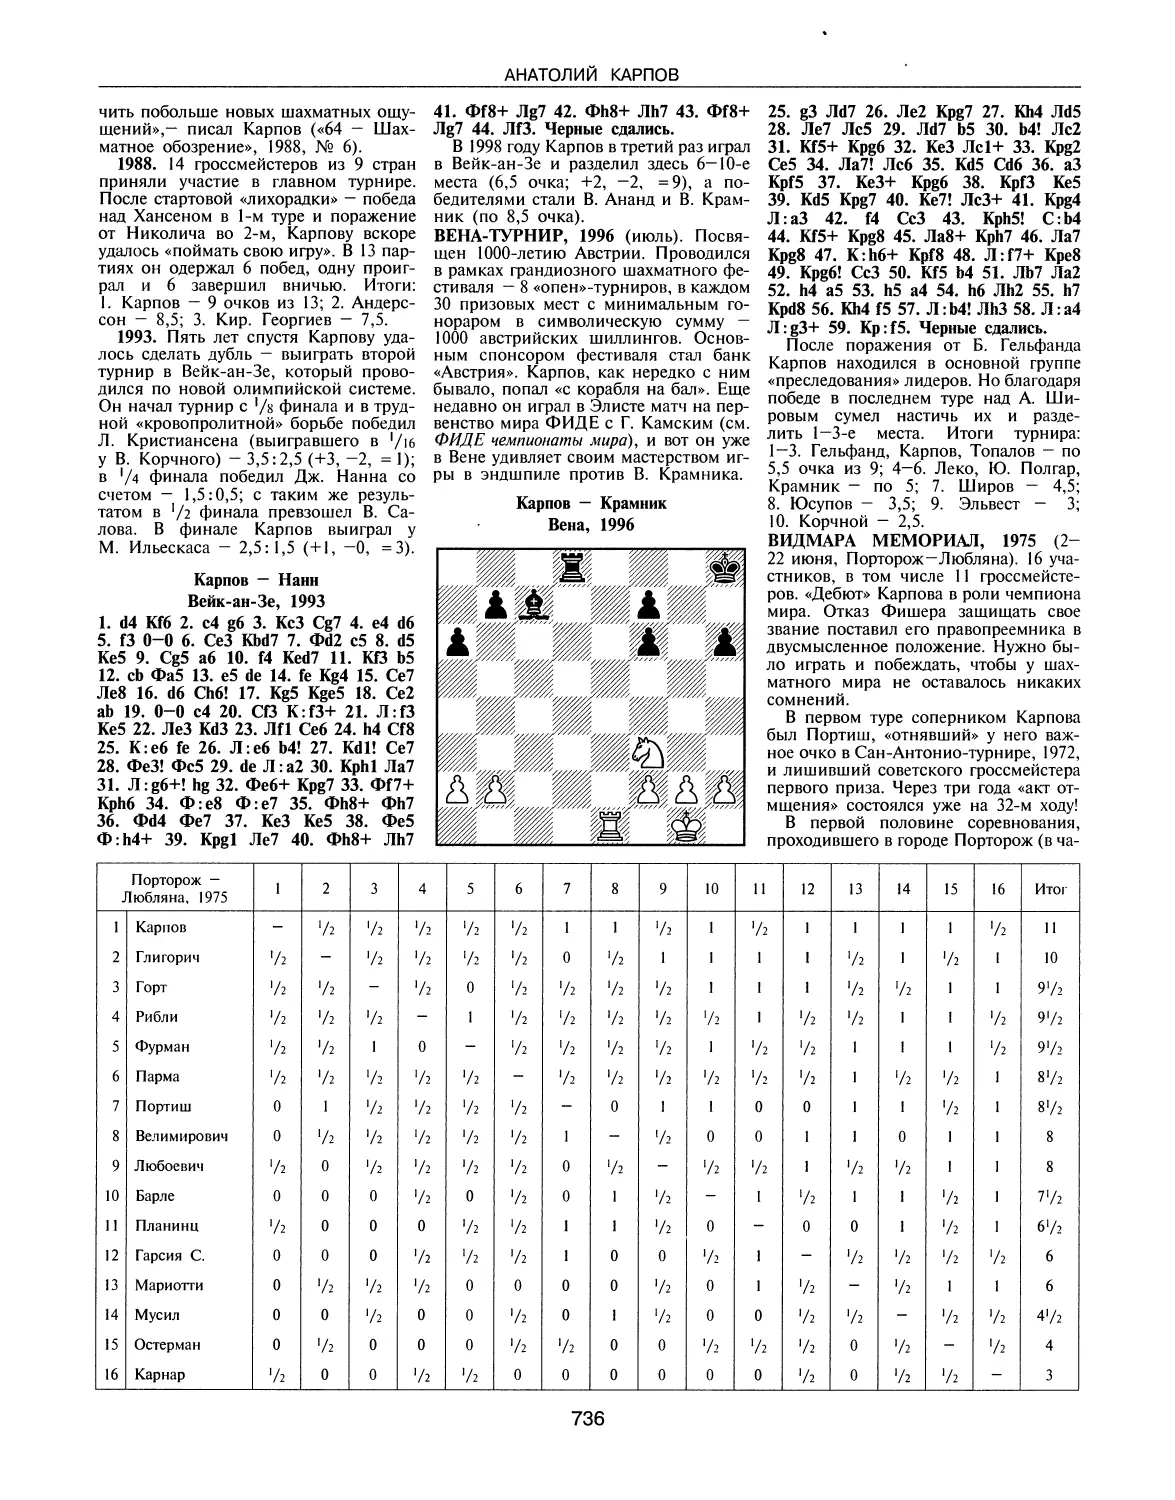 Вена-турнир, 1996
Видмара мемориал, 1975